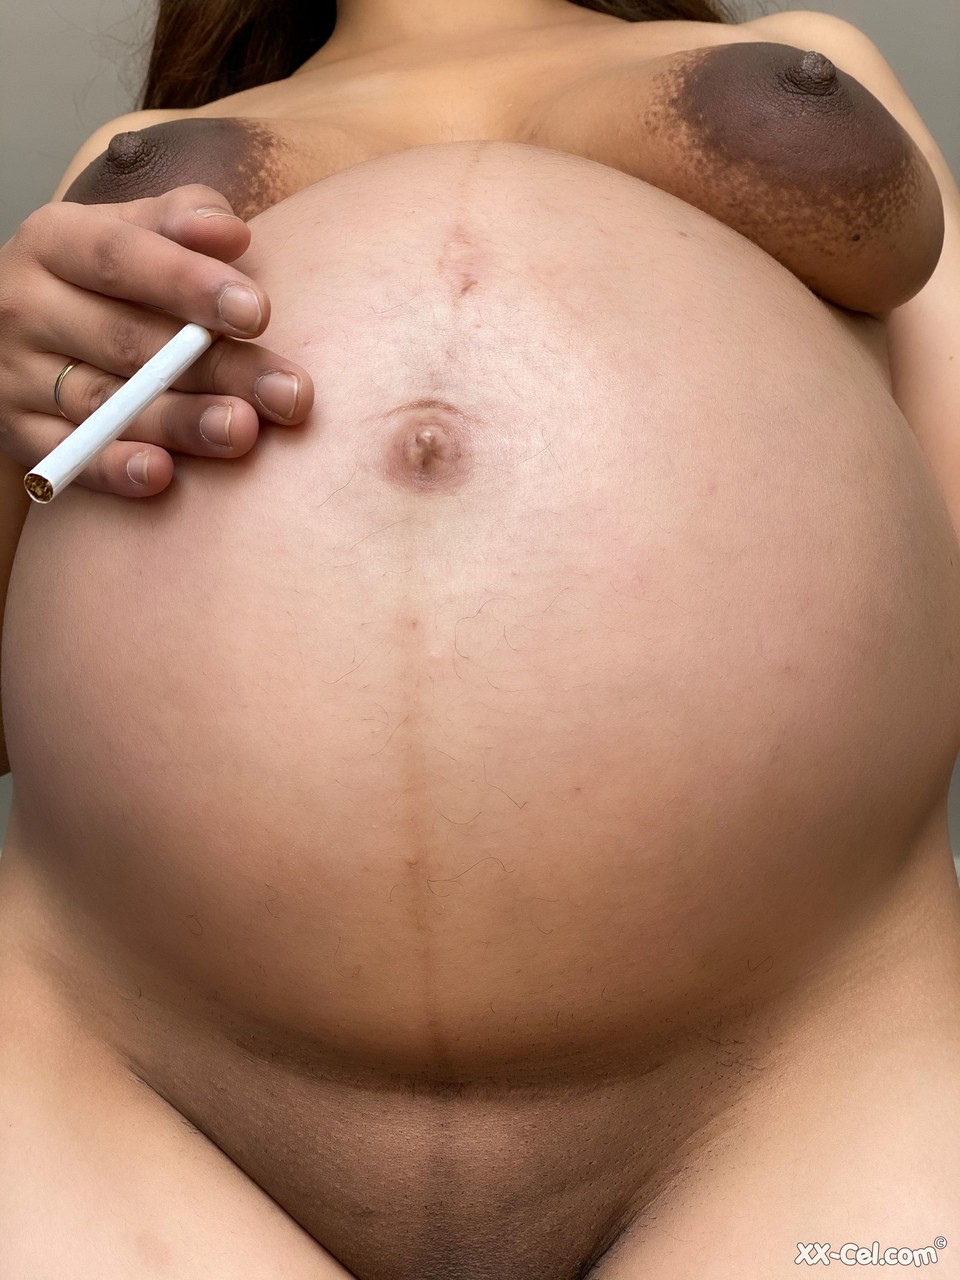 Pregnant smoker Leila teasing nude with her bulging tummy & her dark nipples foto porno #424132694 | XX Cel Pics, Leila, Pregnant, porno móvil